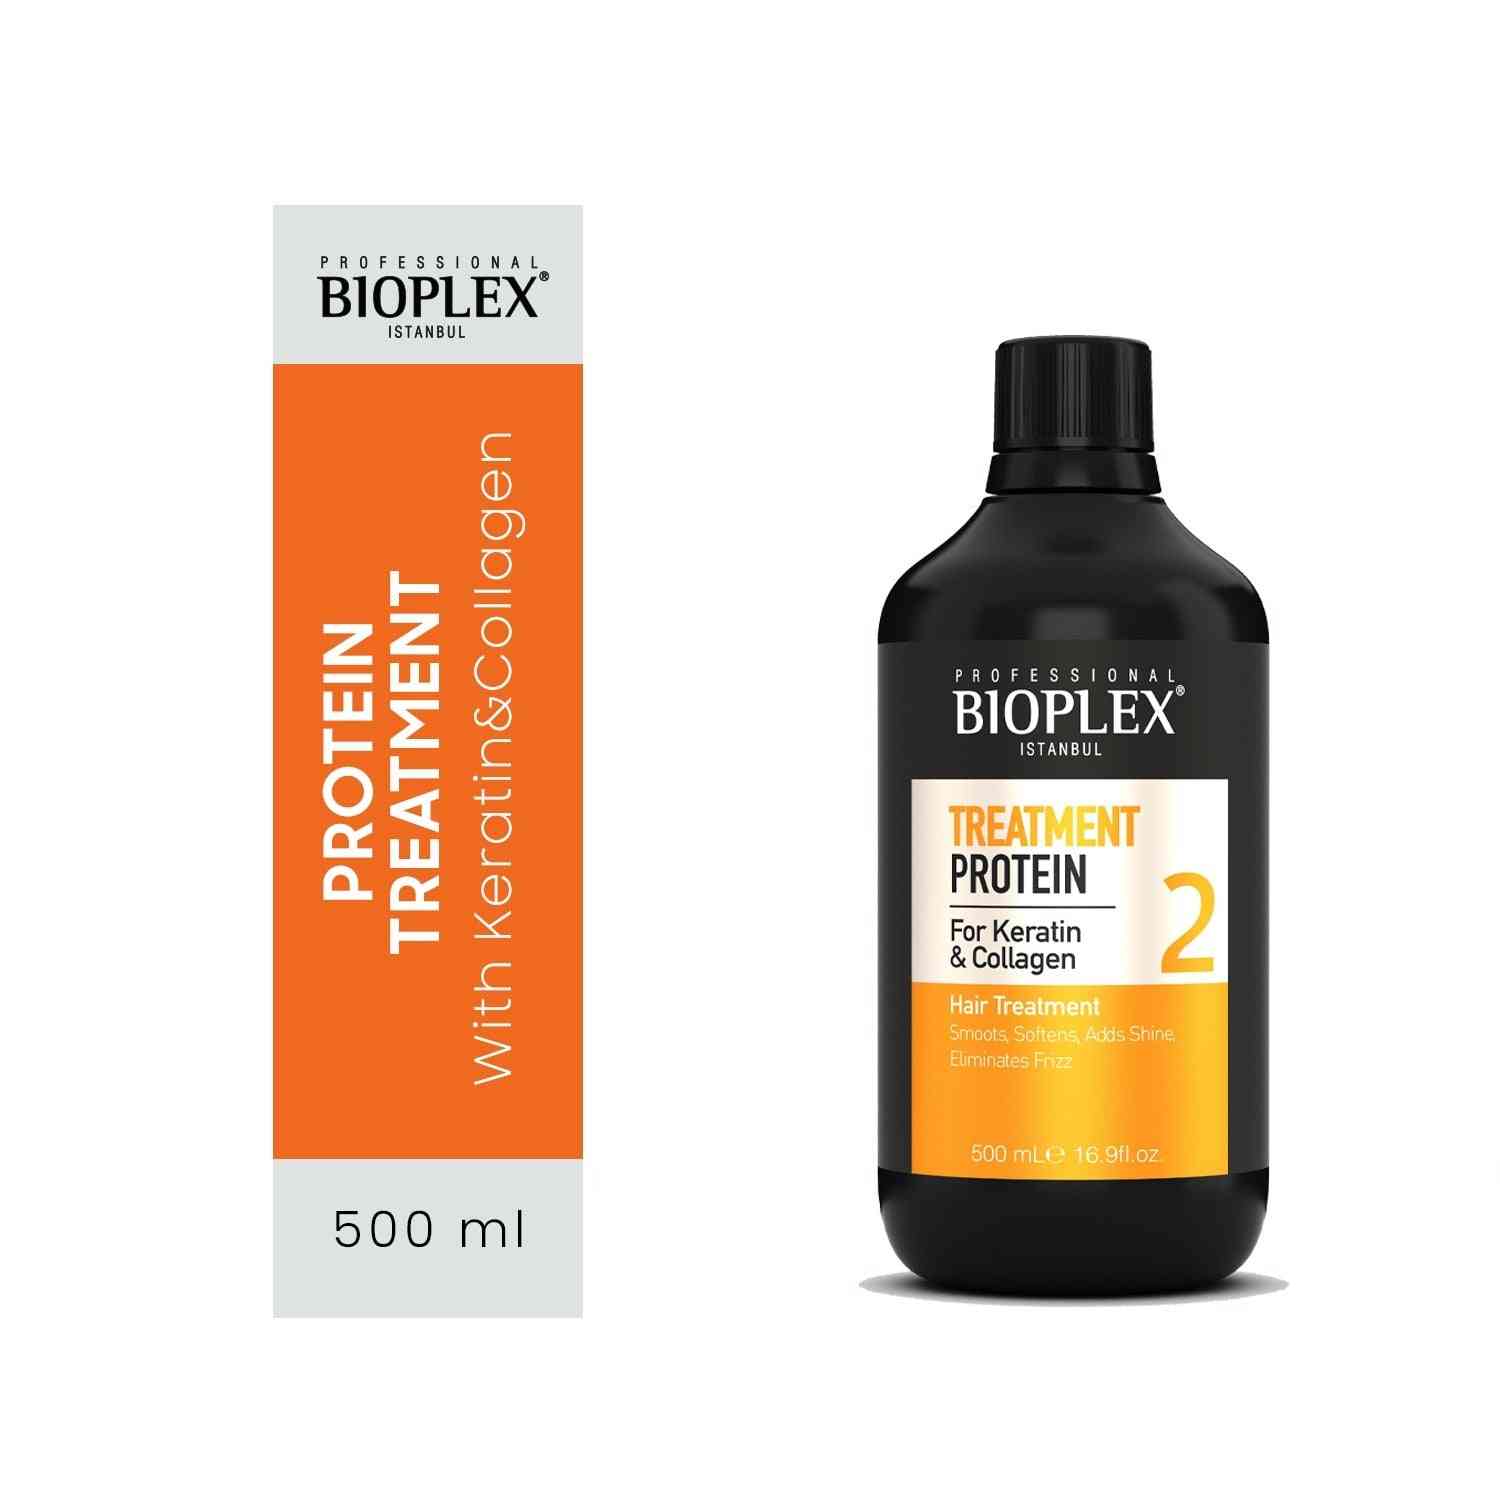 Bioplex behandling protein hårpleje keratin behandling